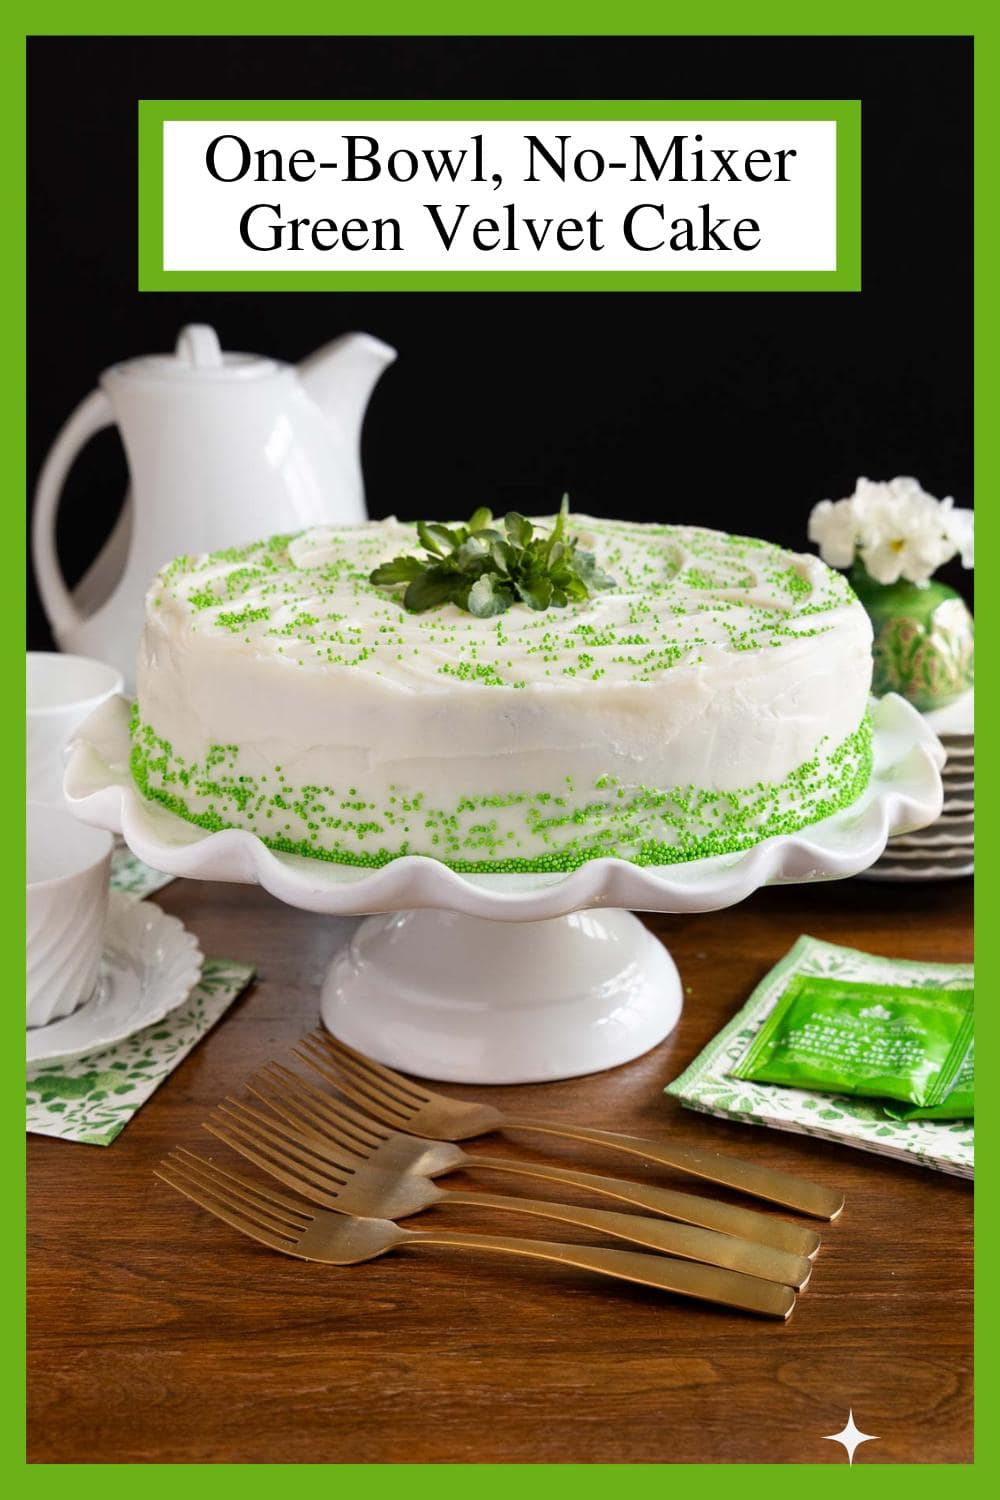 One-Bowl, No-Mixer Green Velvet Cake